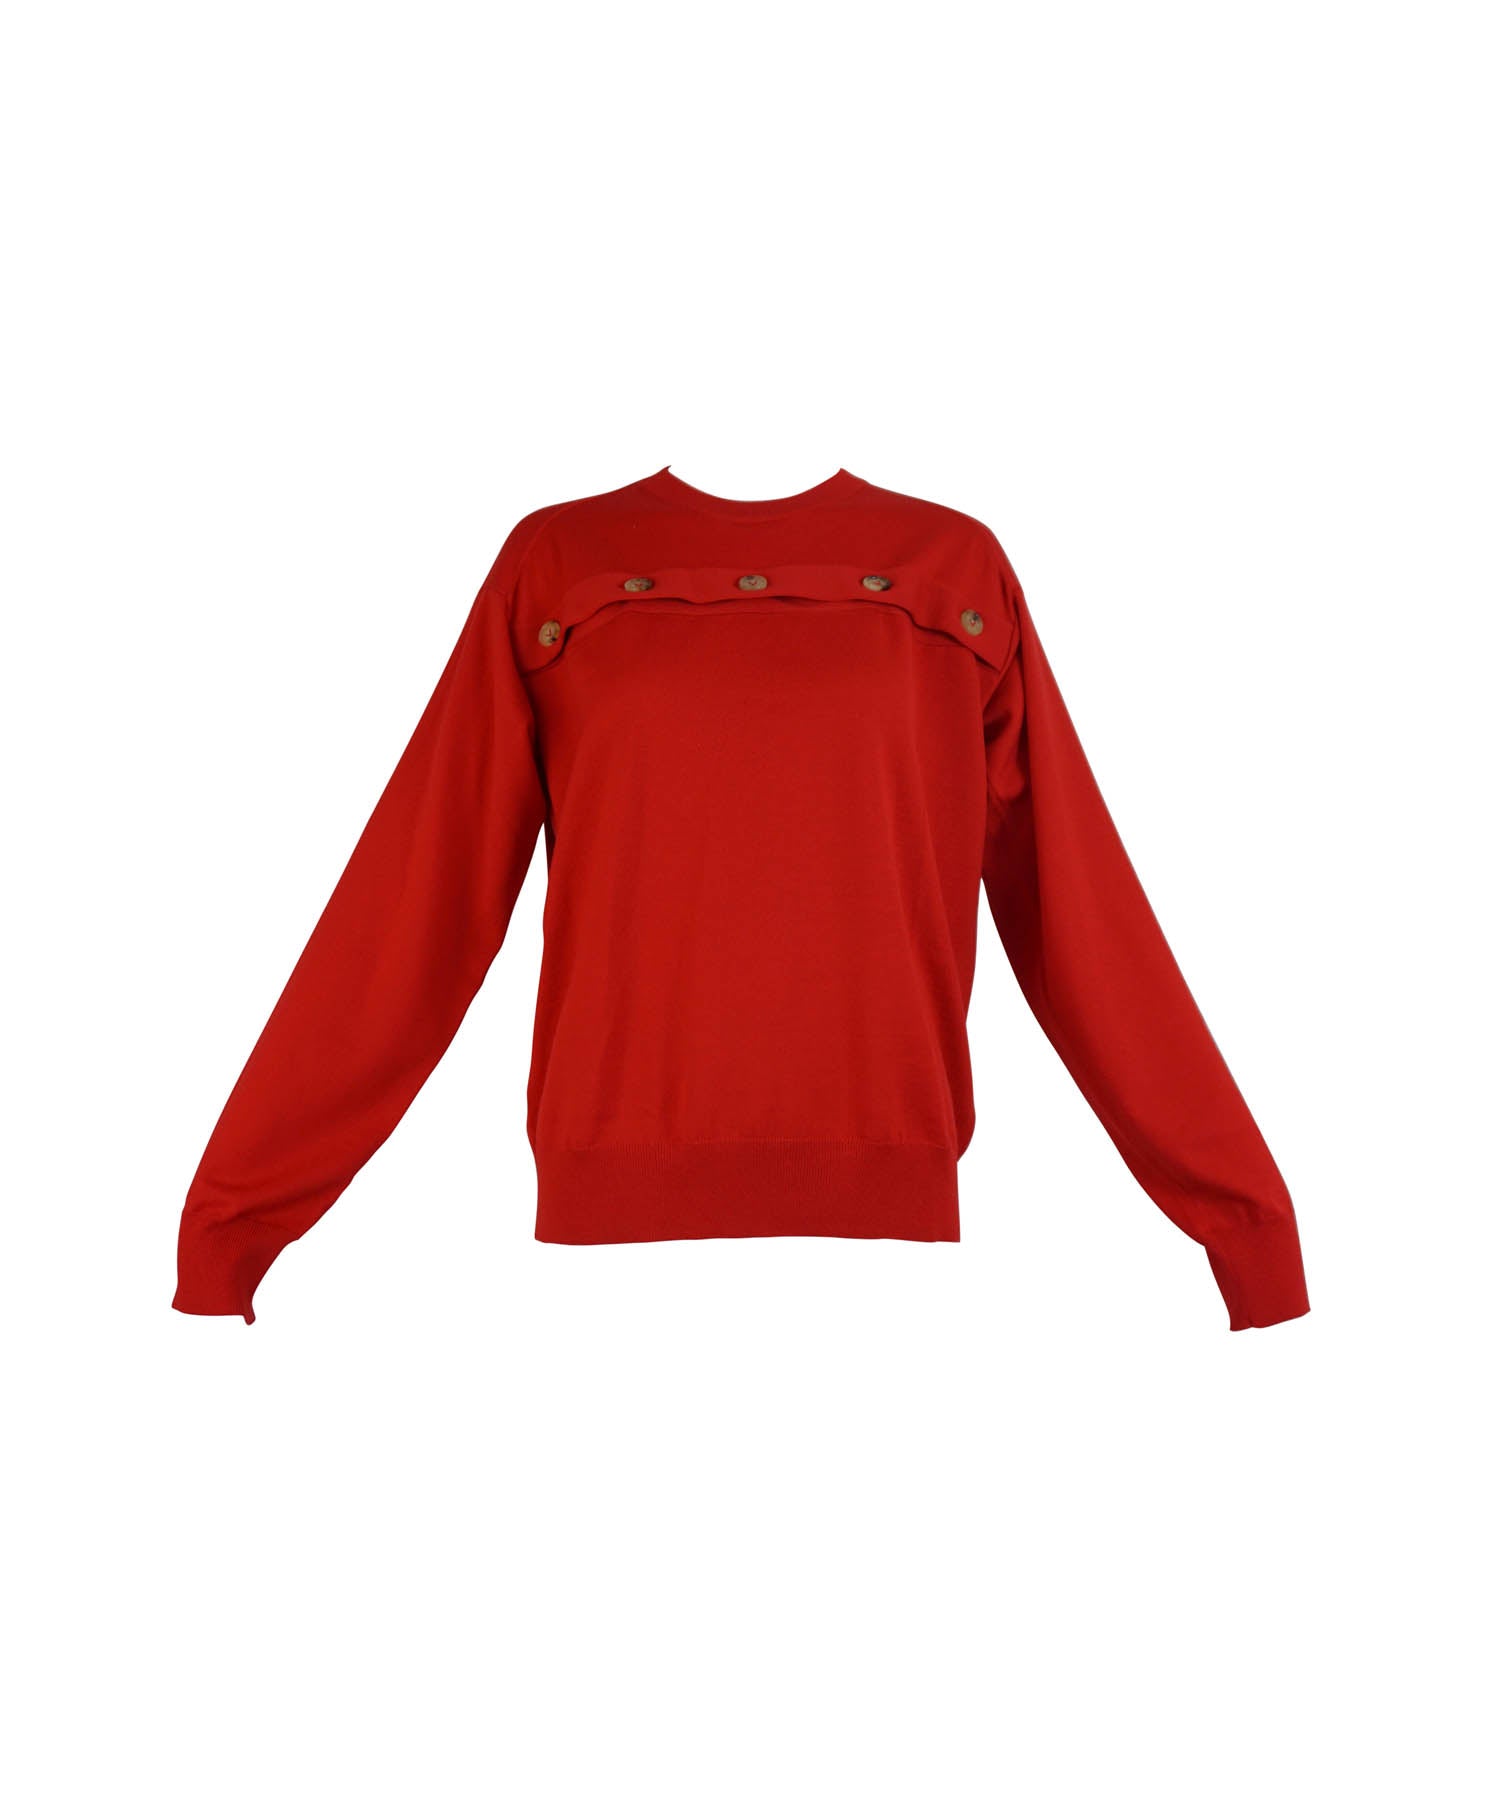 Bottega Veneta Nail Polish Red Sweater - Foxy Couture Carmel